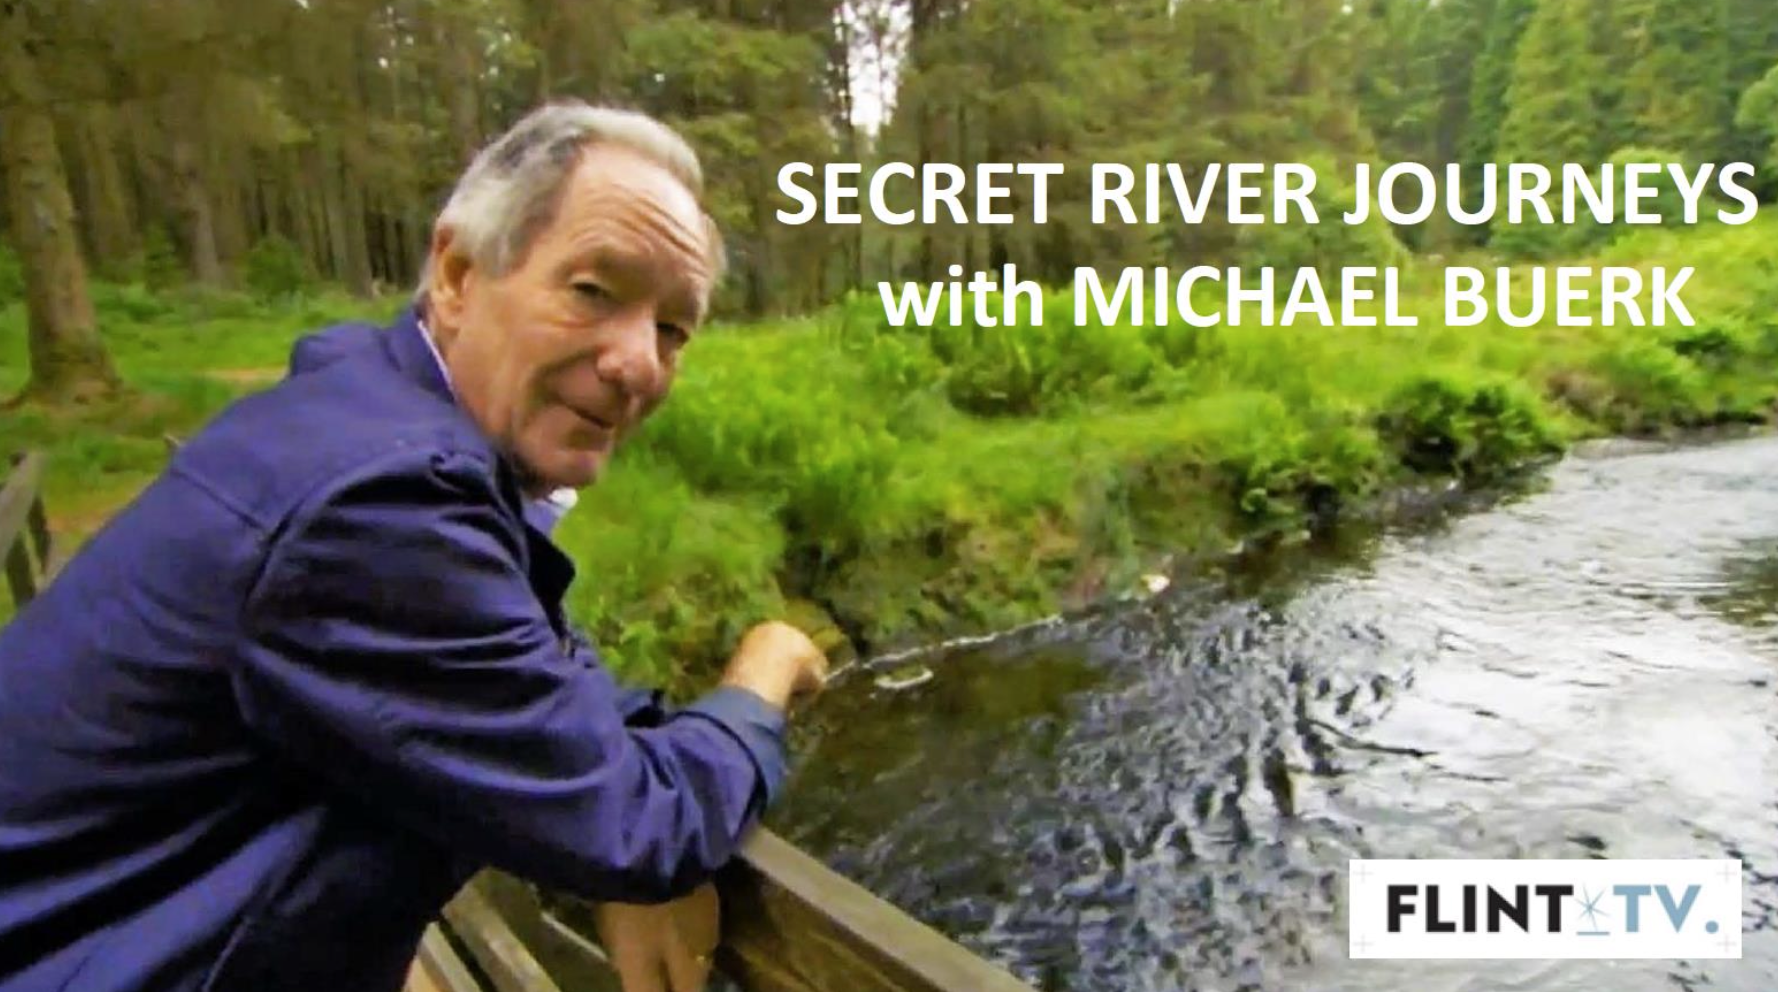 Secret River Journeys with Michael Buerk